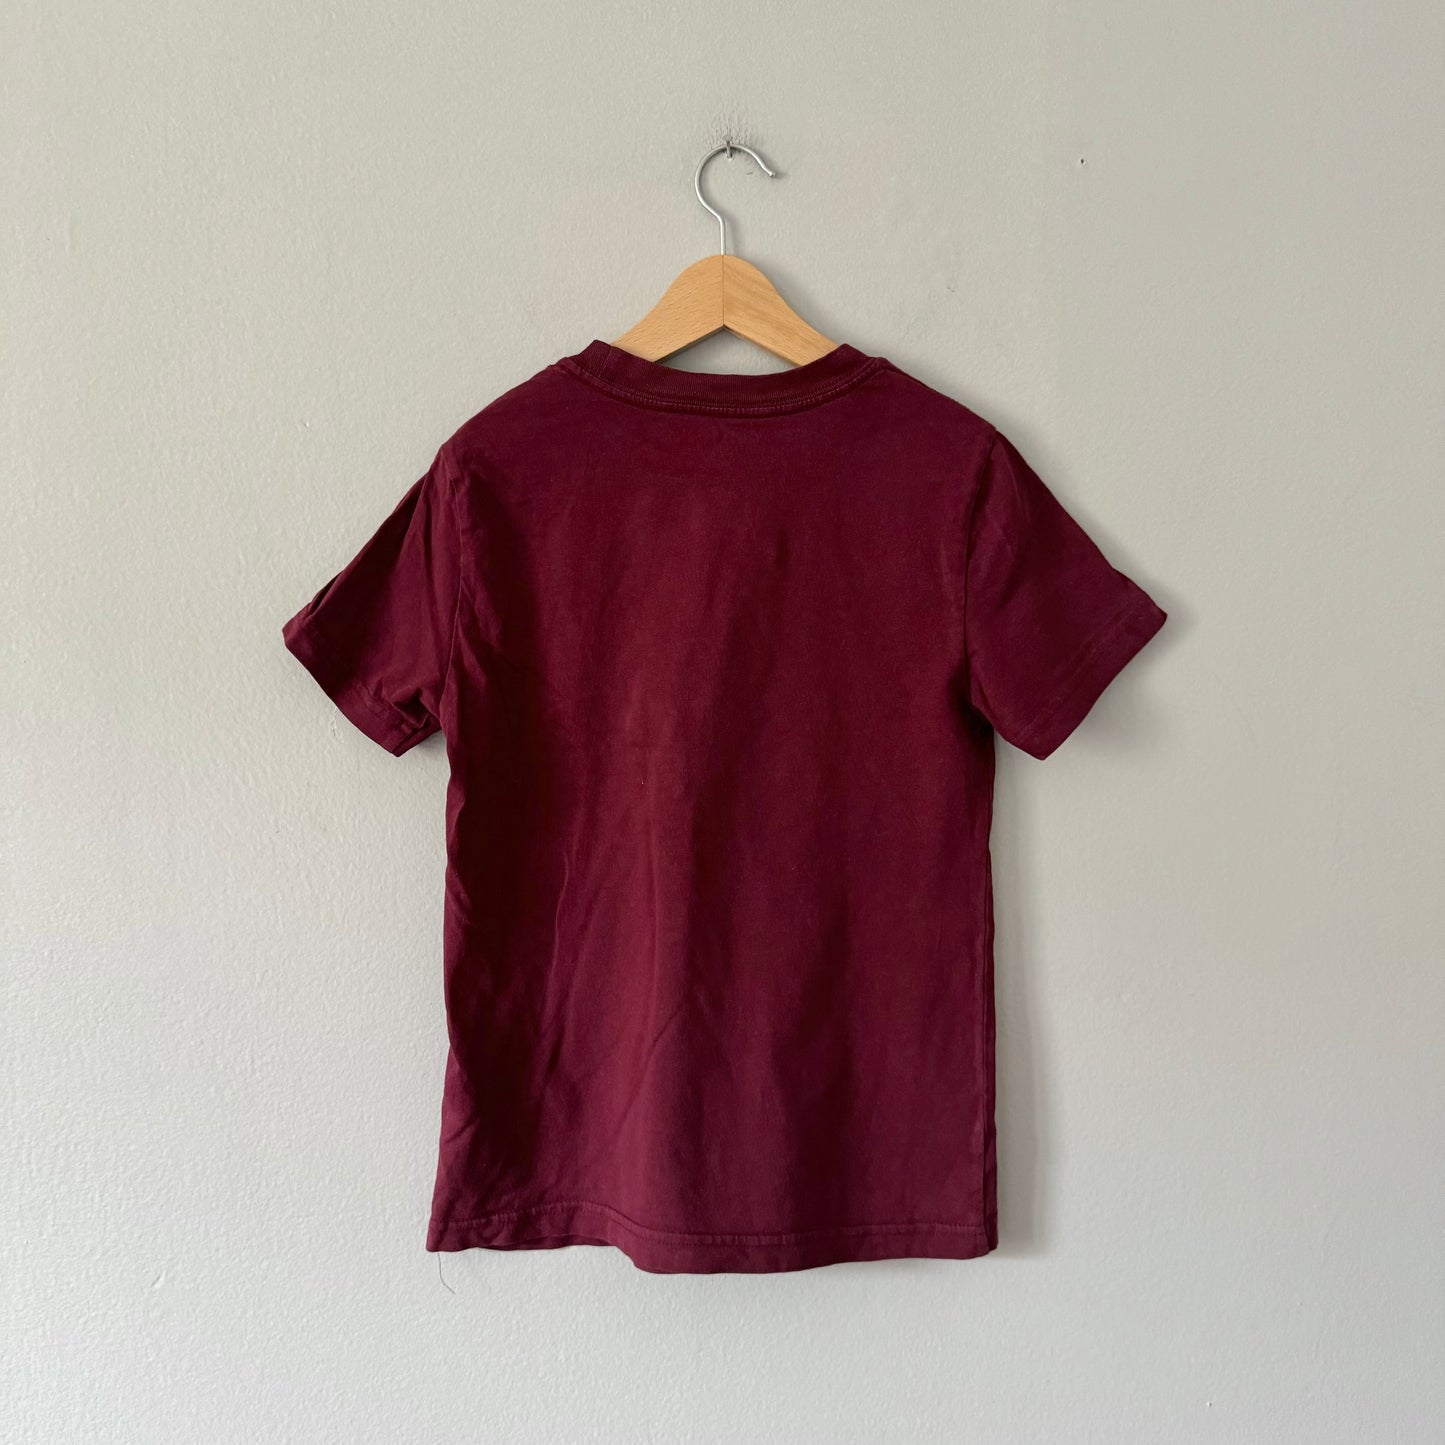 Polo Ralph Lauren	/ Burgundy t-shirt / 6Y